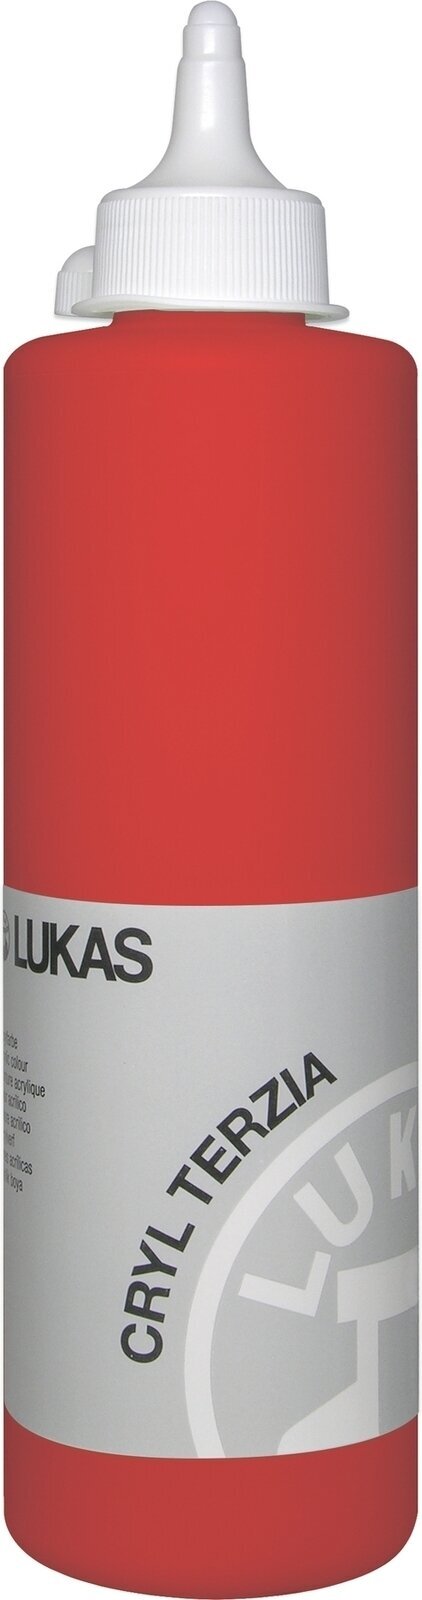 Acrylverf Lukas Cryl Terzia Acrylic Paint Plastic Bottle Acrylverf Cadmium Red Light Hue 500 ml 1 stuk